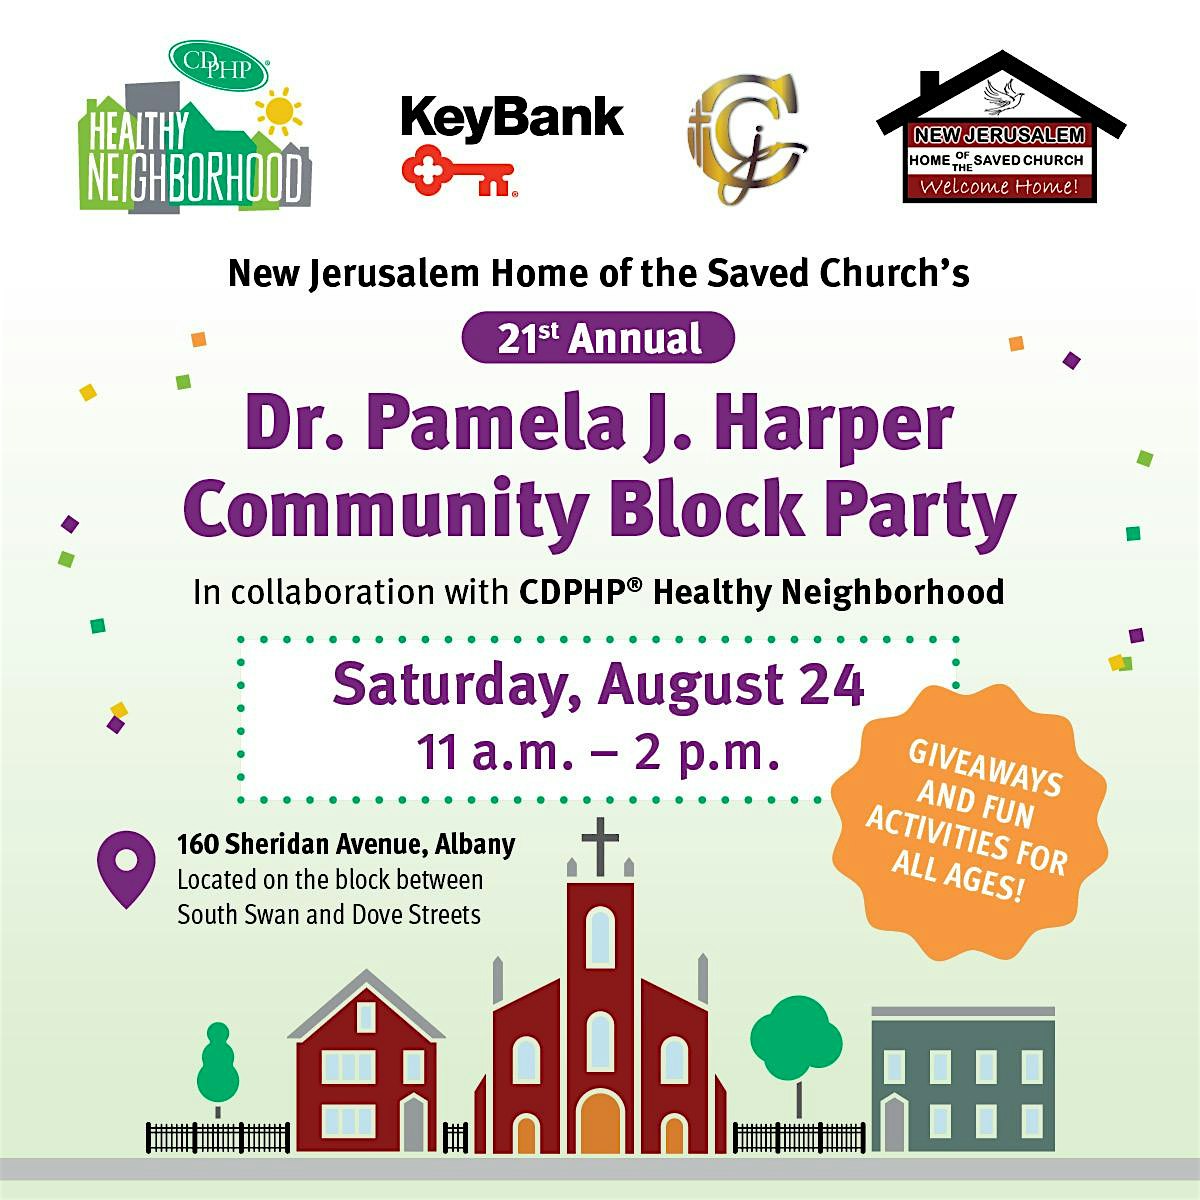 21st Annual Dr. Pamela J. Harper Community Block Party